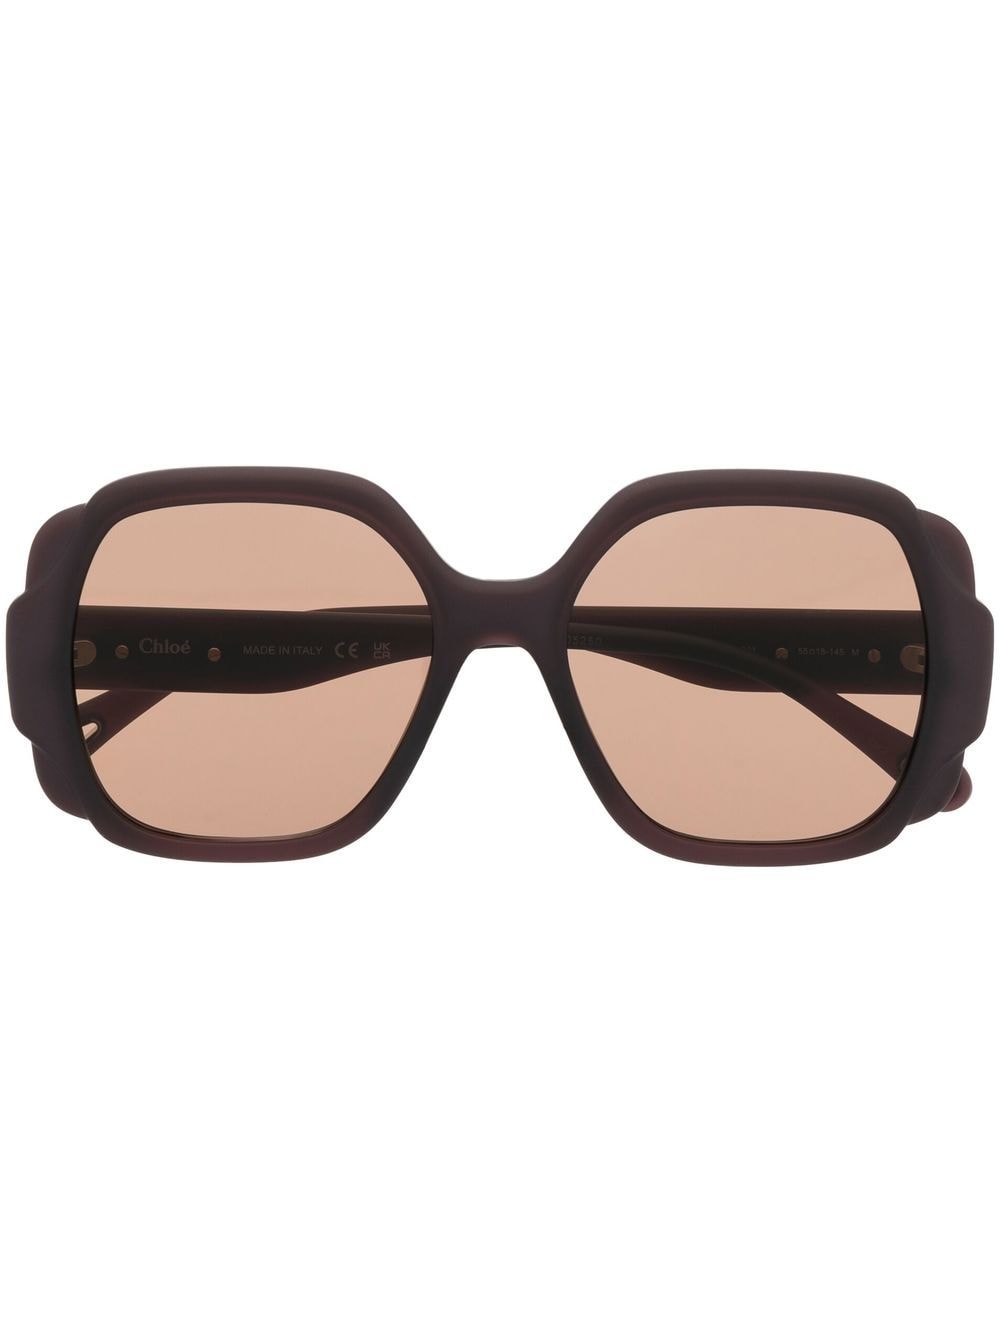 Suare-frame tinted sunglasses